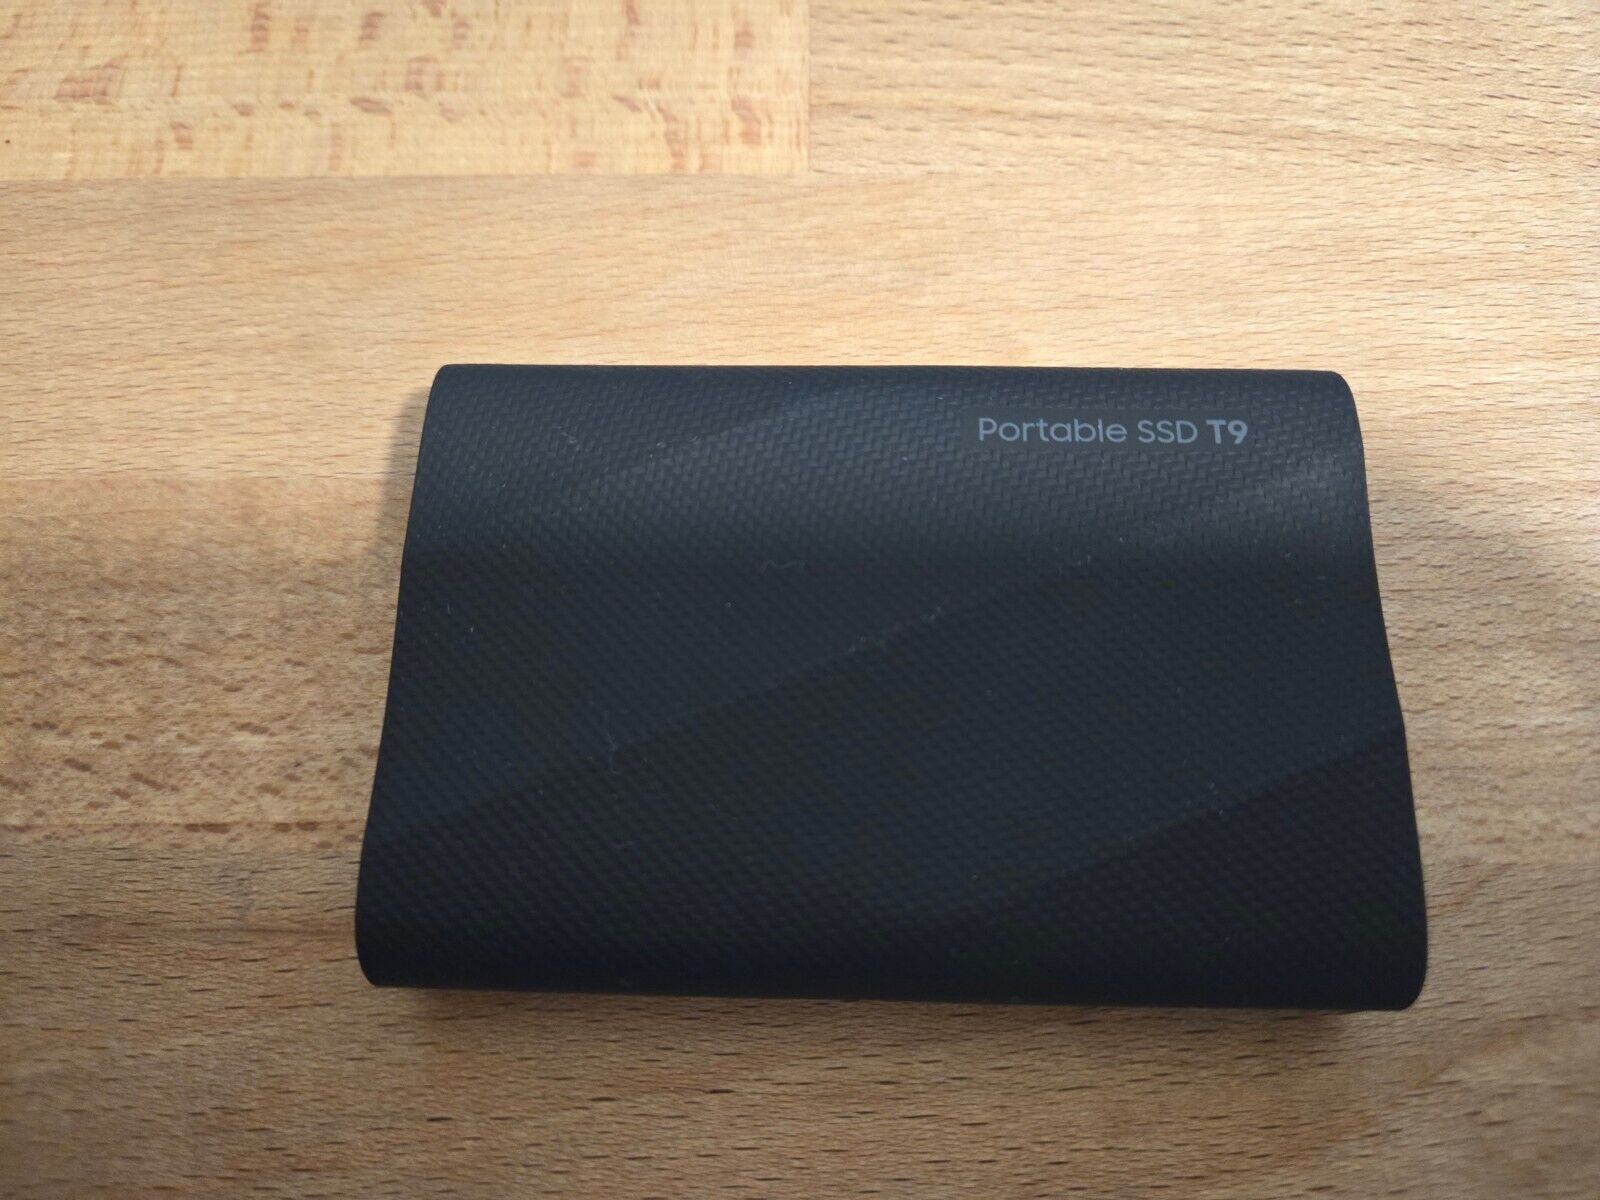 SAMSUNG T9 Portable SSD 1TB, USB 3.2 Gen 2x2 External Solid State Drive, Black